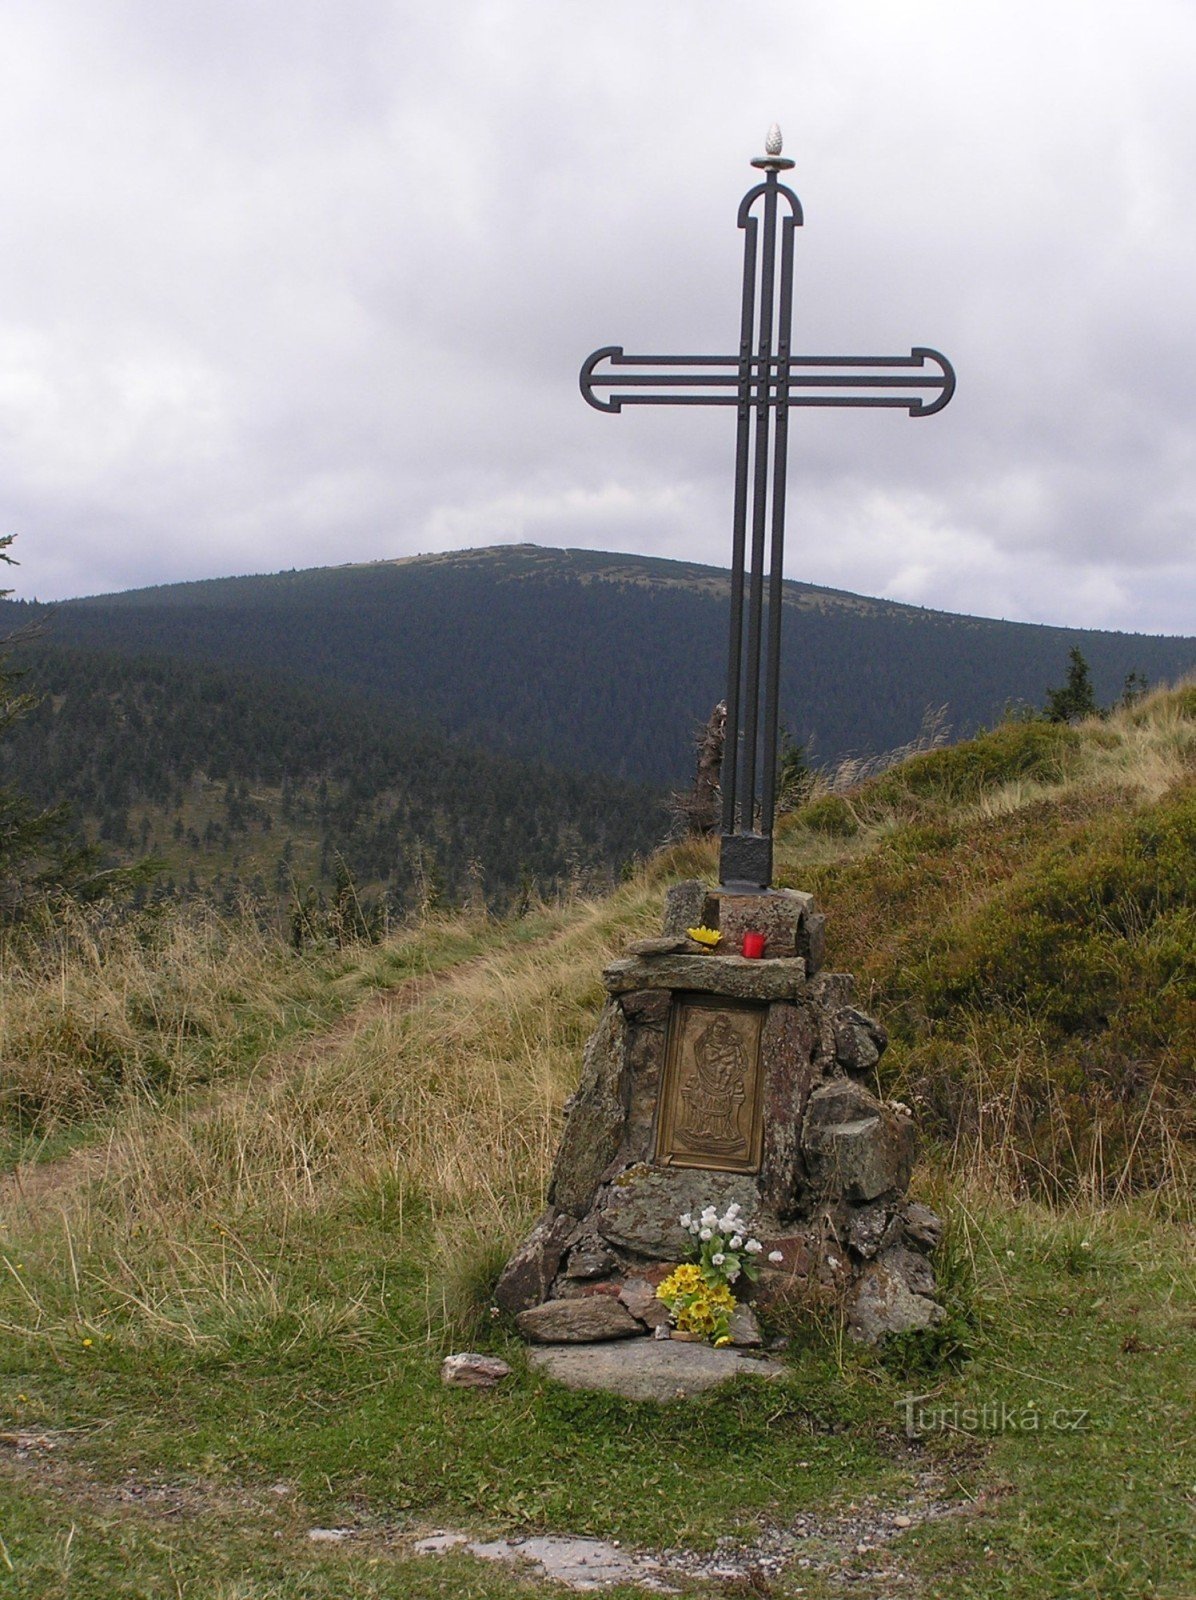 The cross at Vřesová well in the background with Keprník